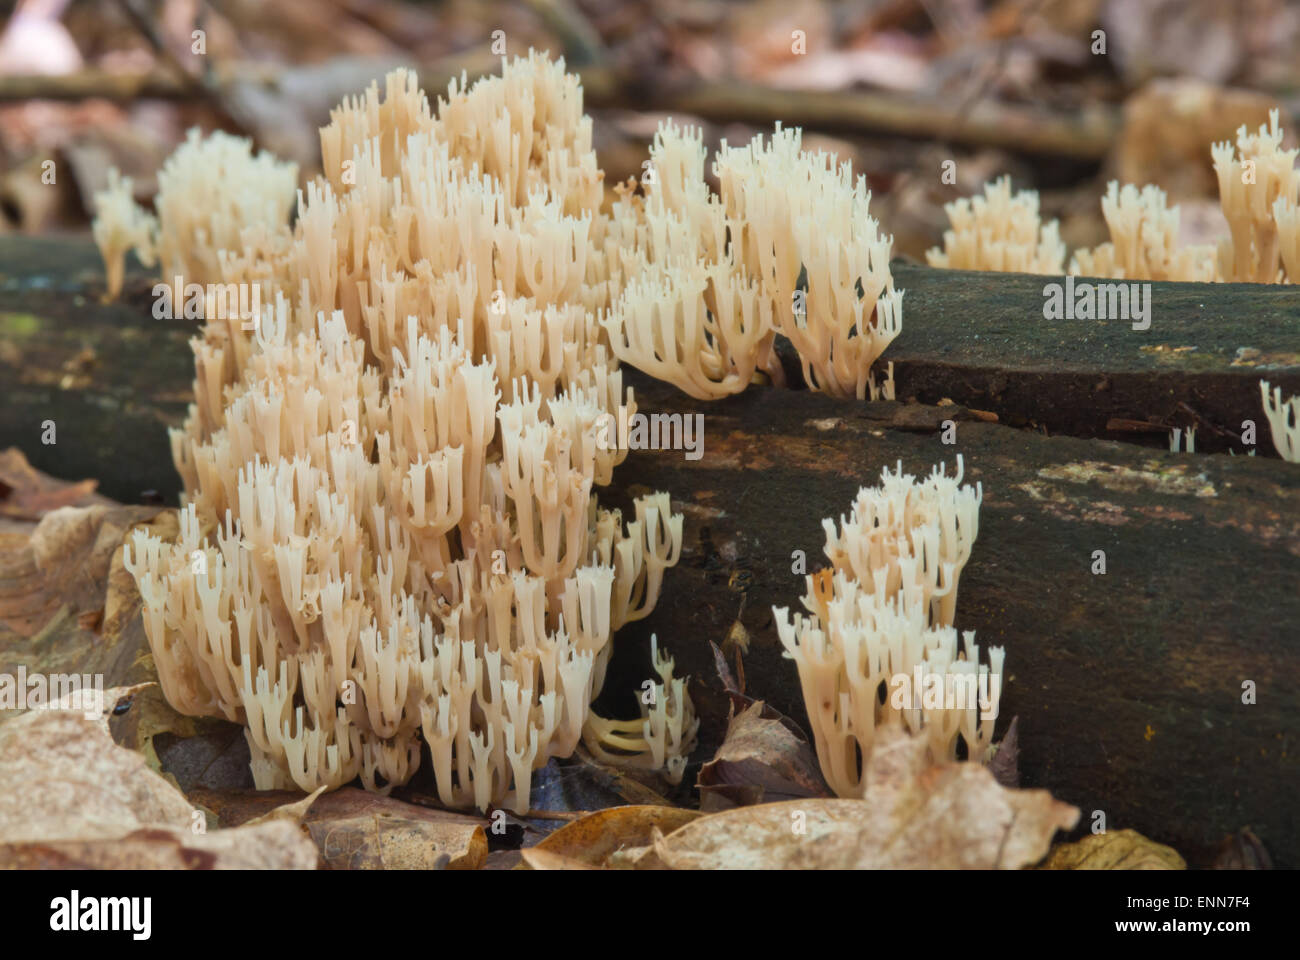 Crown coral fungus, Clavicorona pyxidata, growing on a rotting log in Charleston Lake Provincial Park, Ontario Stock Photo